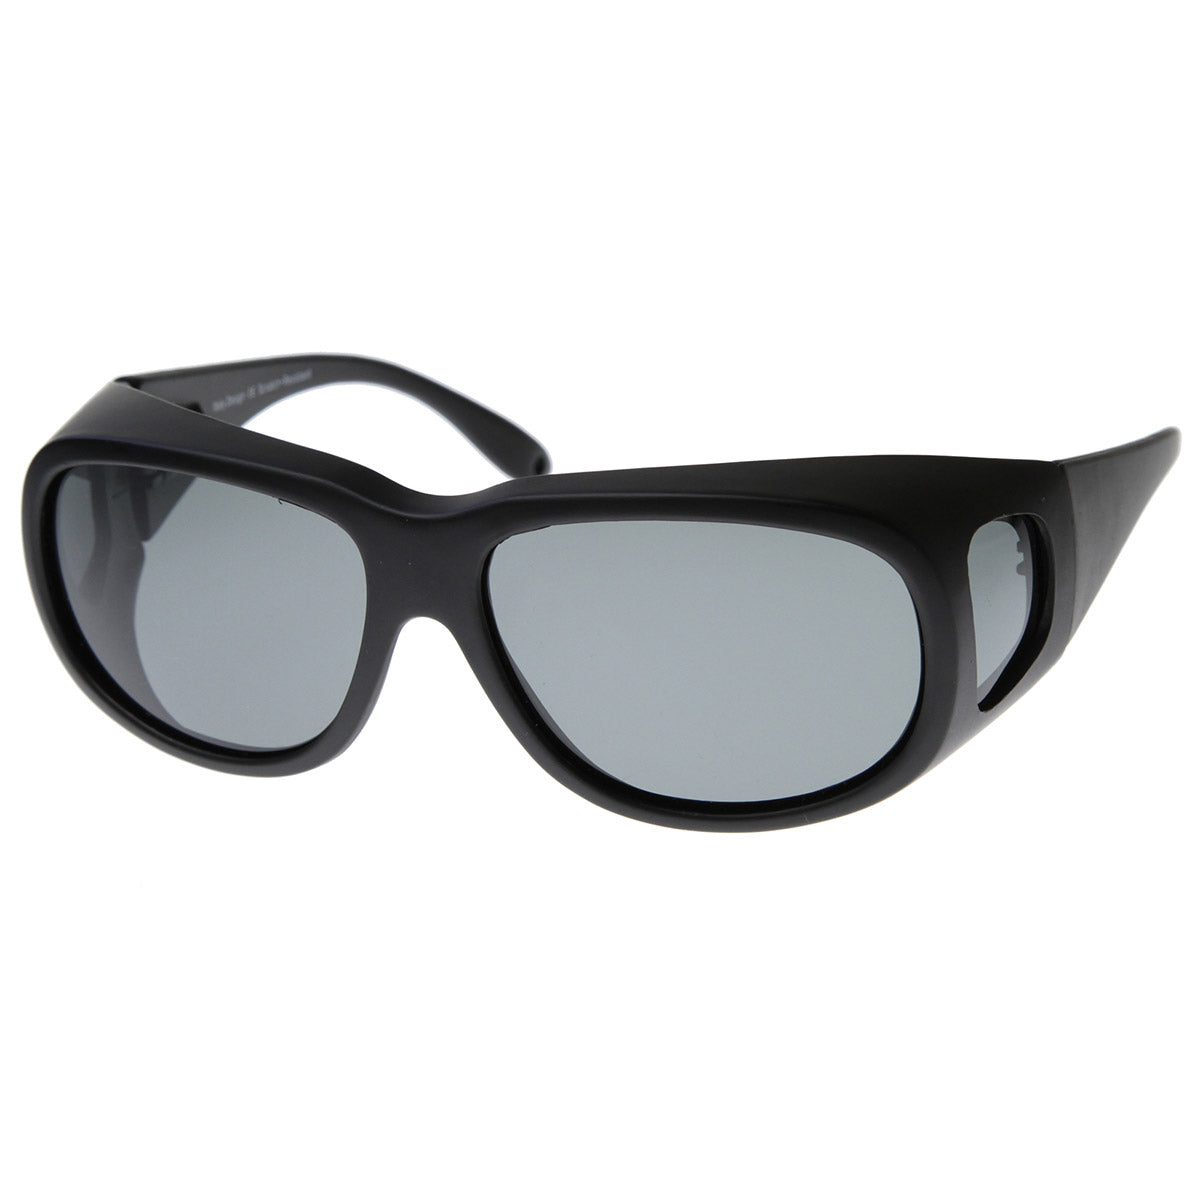 New Polarized Anti Glare Lens Large Cover Wrap Sunglasses with